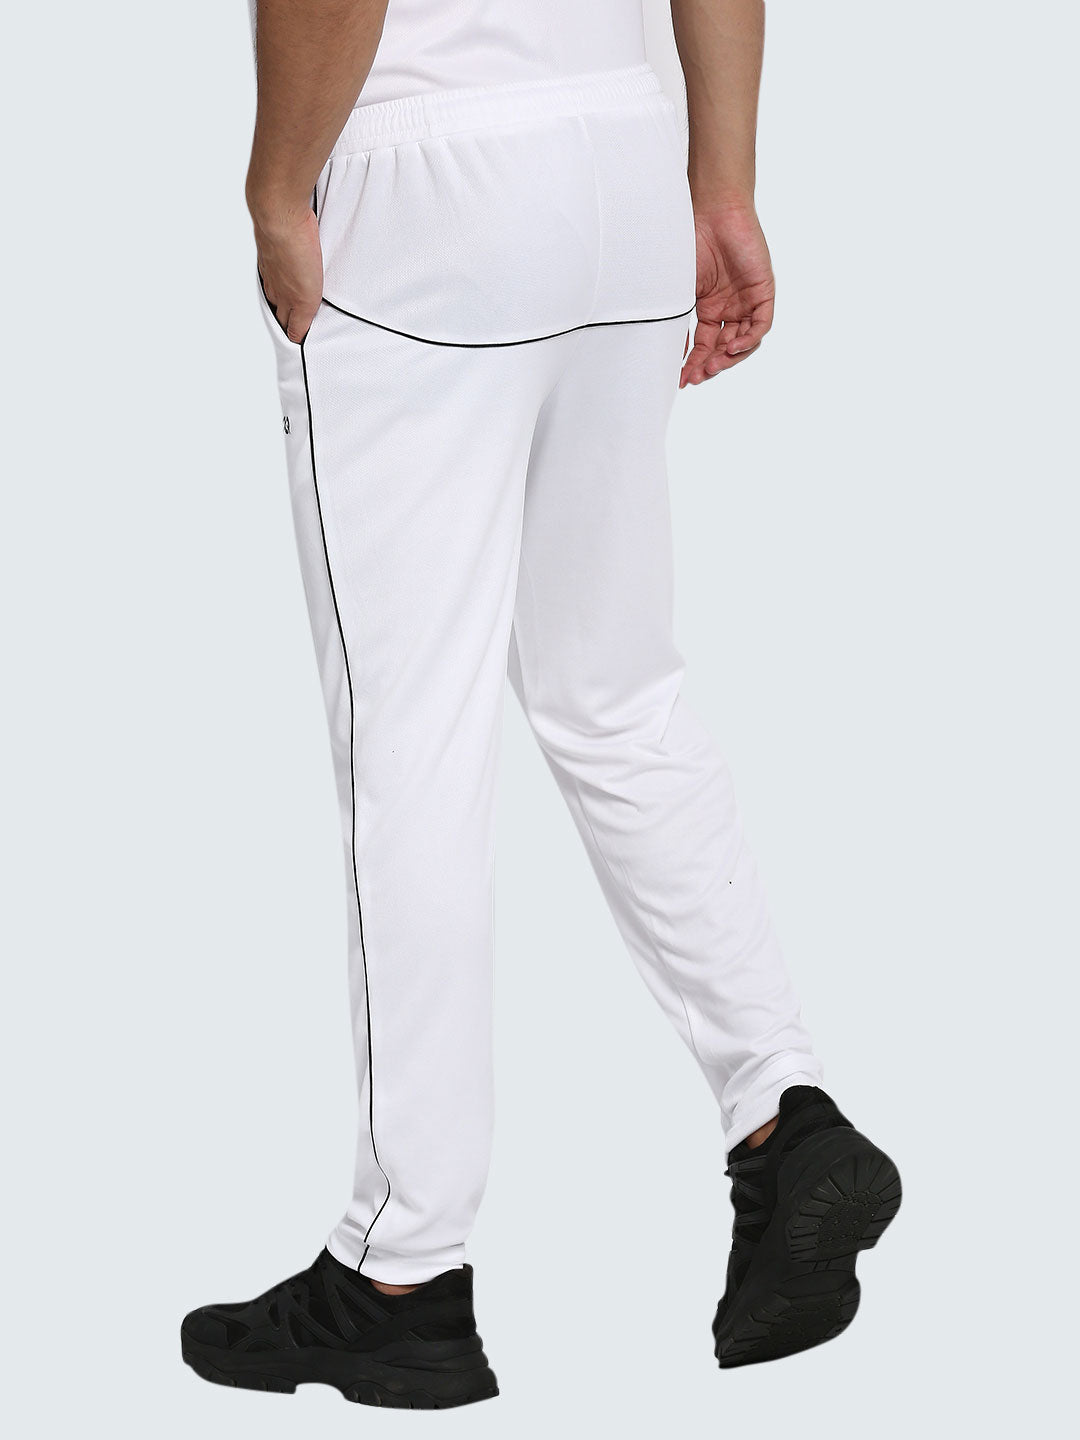 Vector X Striker BoysKids Cricket Track PantTrouser White  Amazonin  Clothing  Accessories